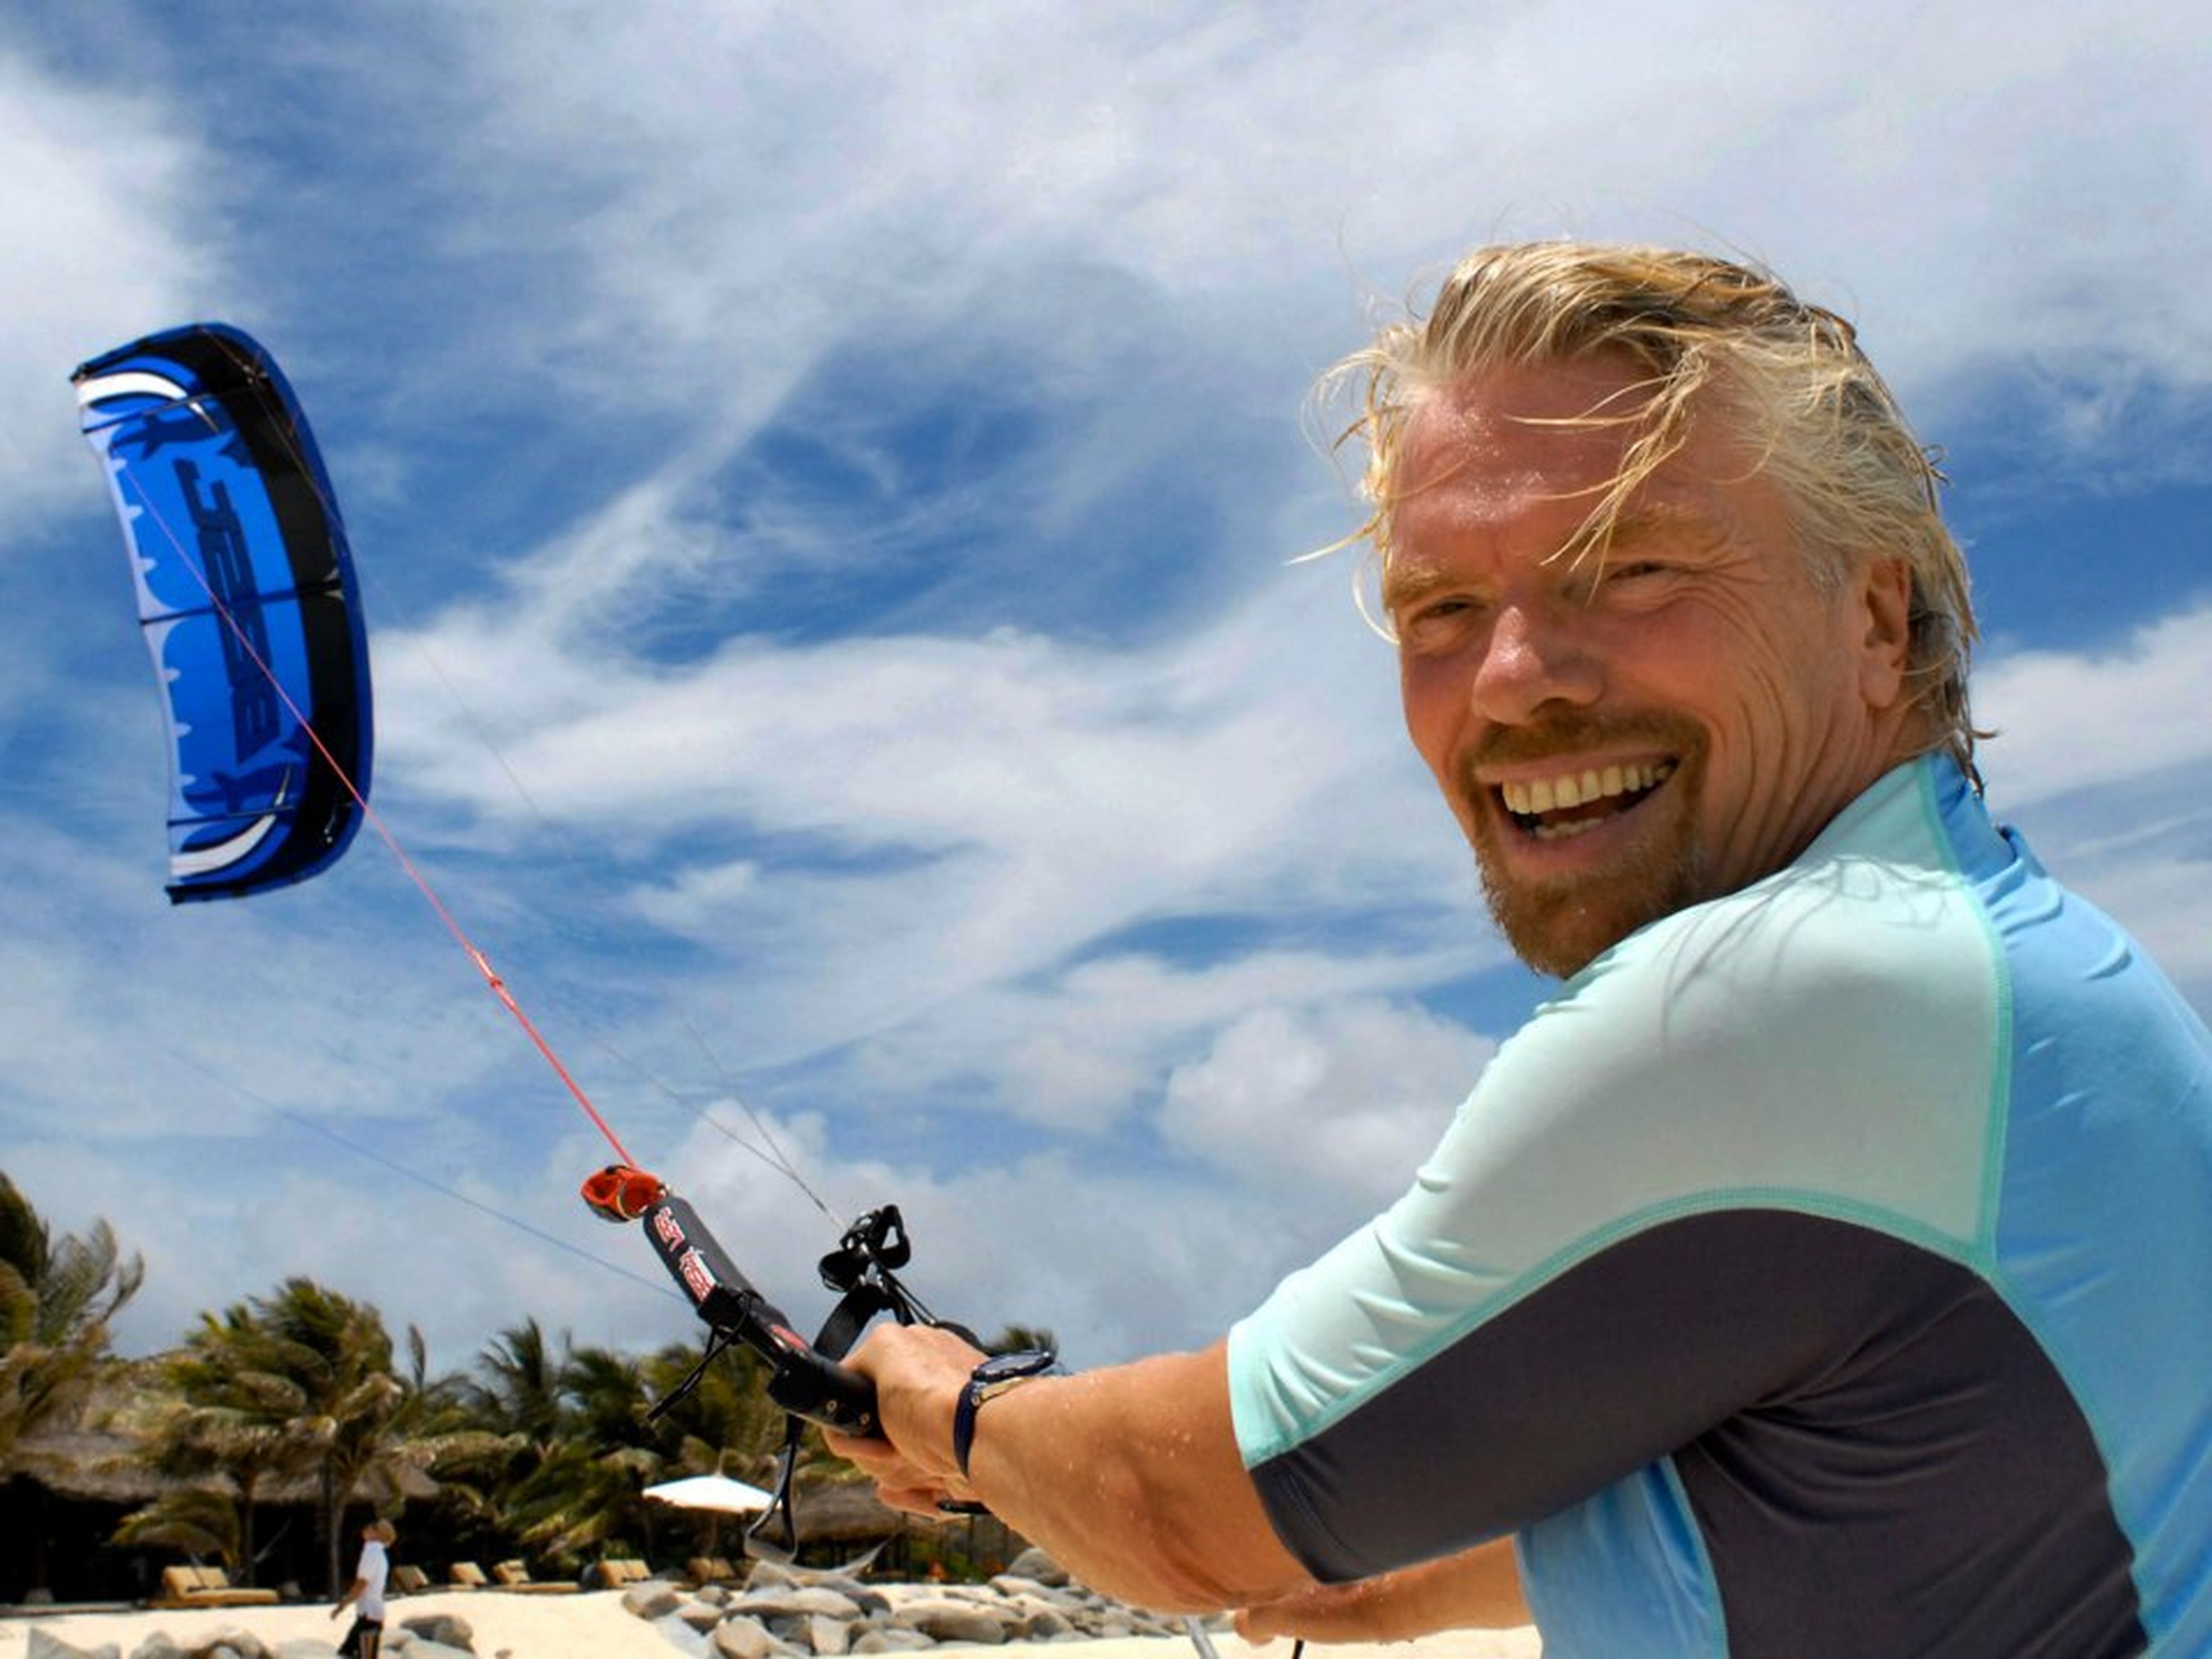 Richard Branson, fundador de Virgin Group.